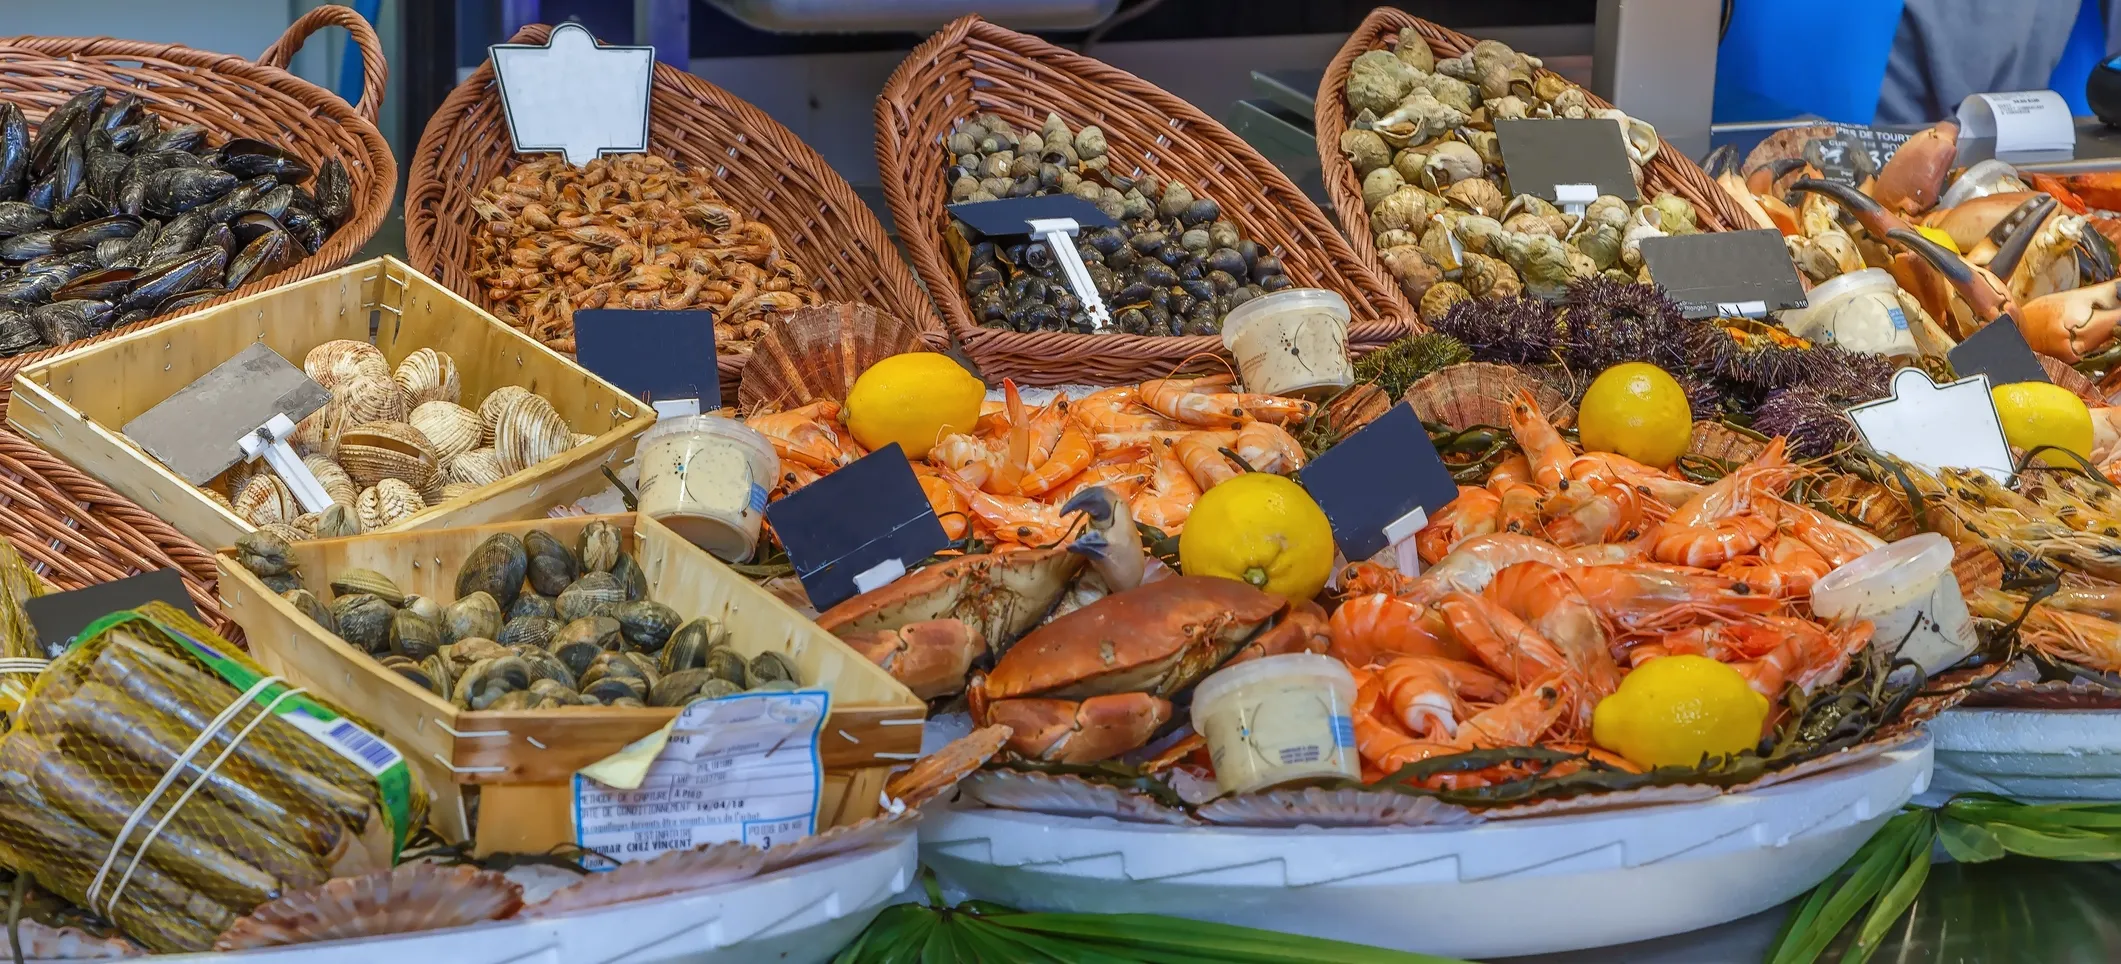 Comptoir de crustacés à Bayonne © iStock/Borisb17